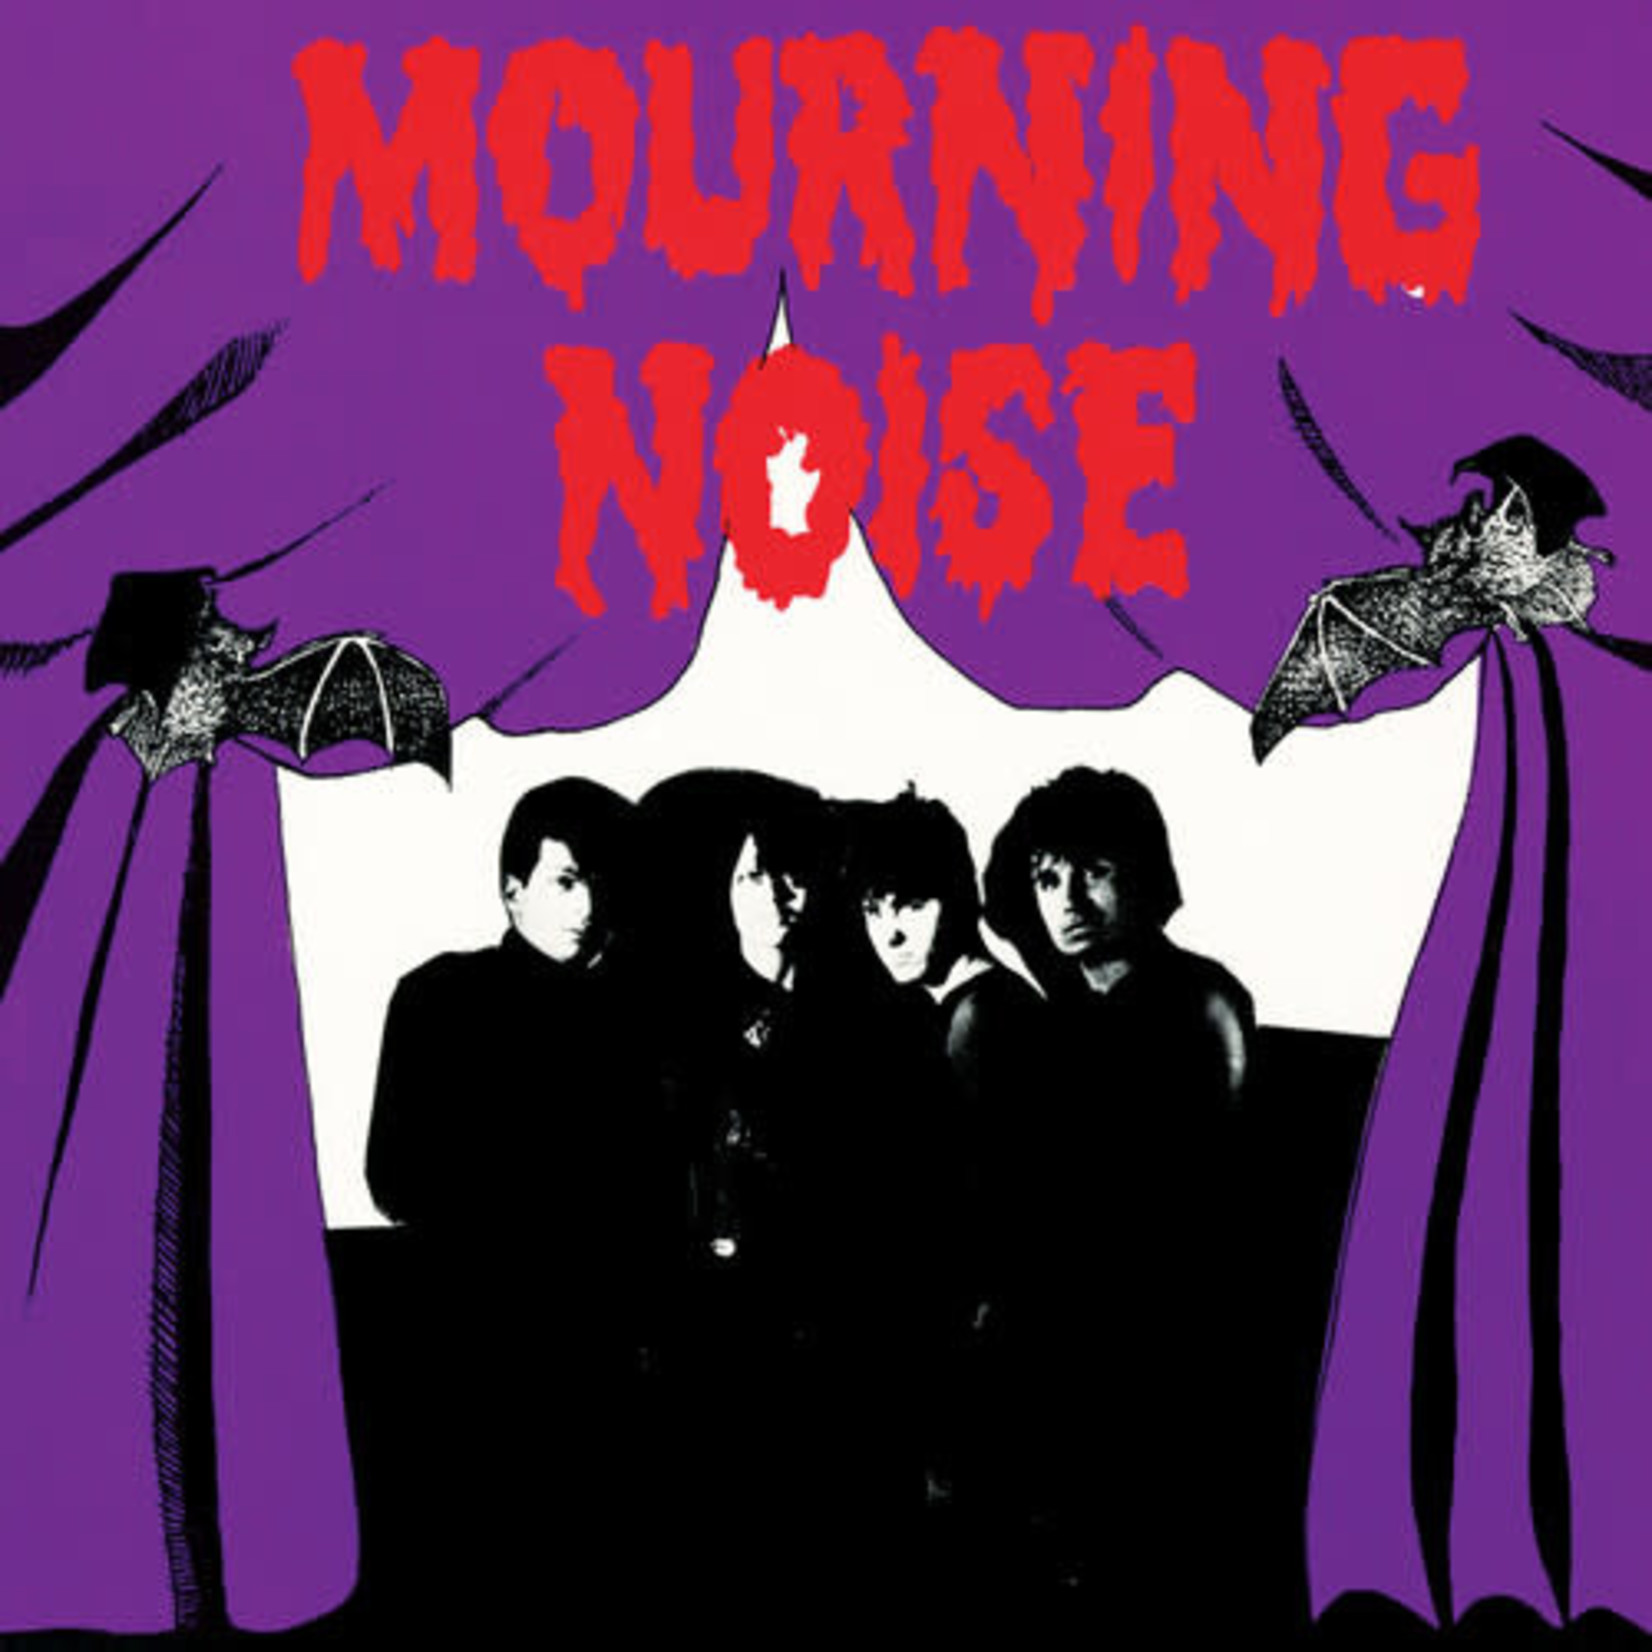 Cleopatra Mourning Noise - Mourning Noise (LP) [Purple]